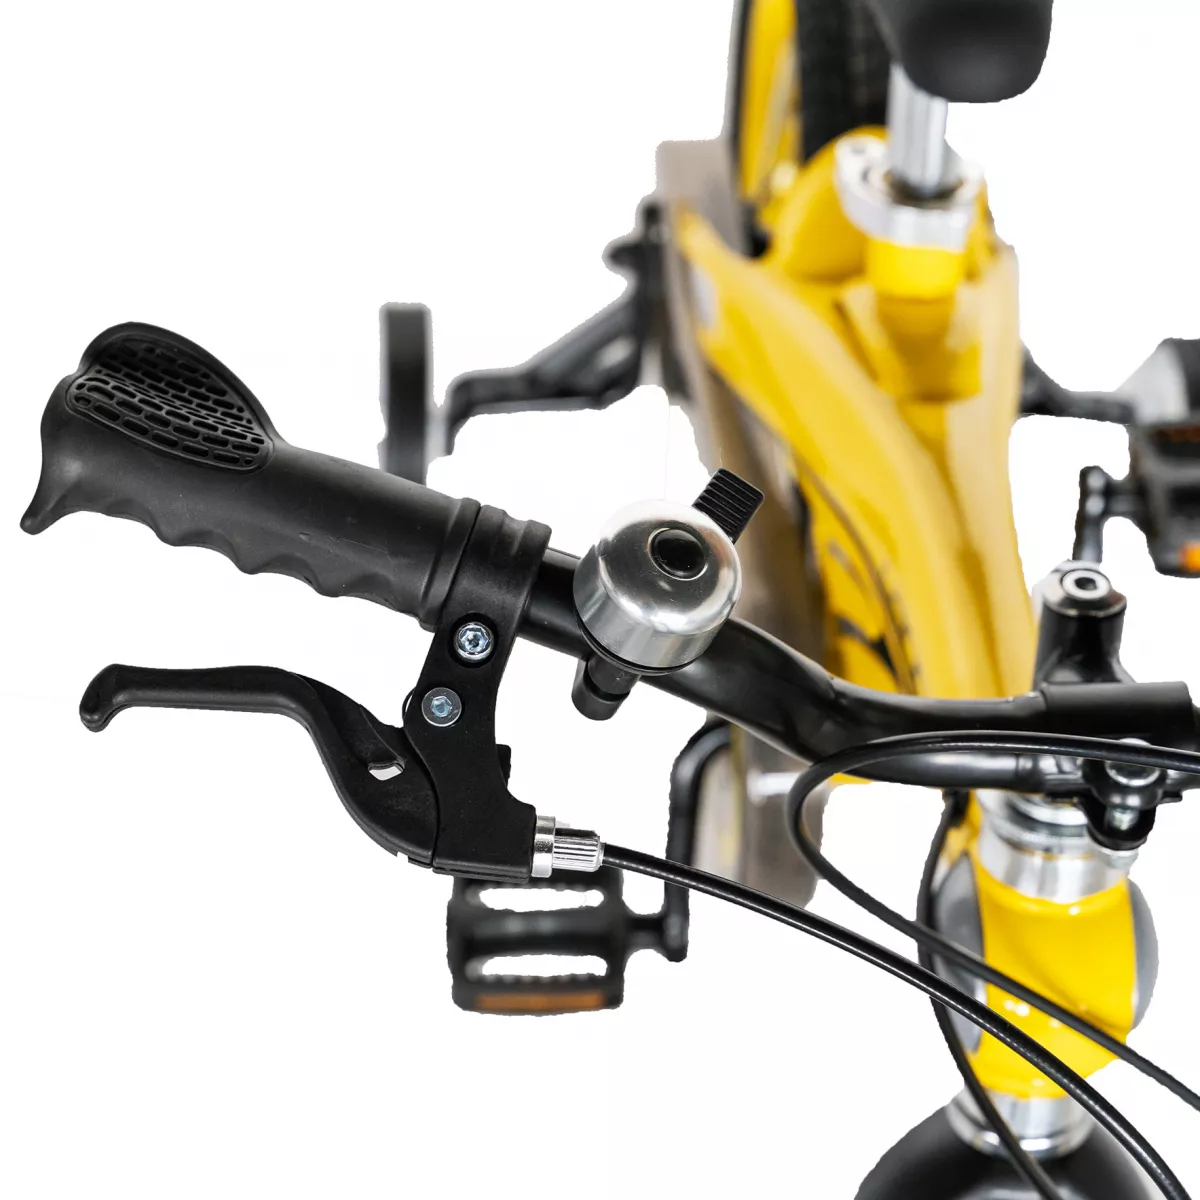 Bicicleta copii W1639D, roata 16", cadru aliaj magneziu, frana C-Brake, roti ajutatoare, 4-6 ani, galben/negru